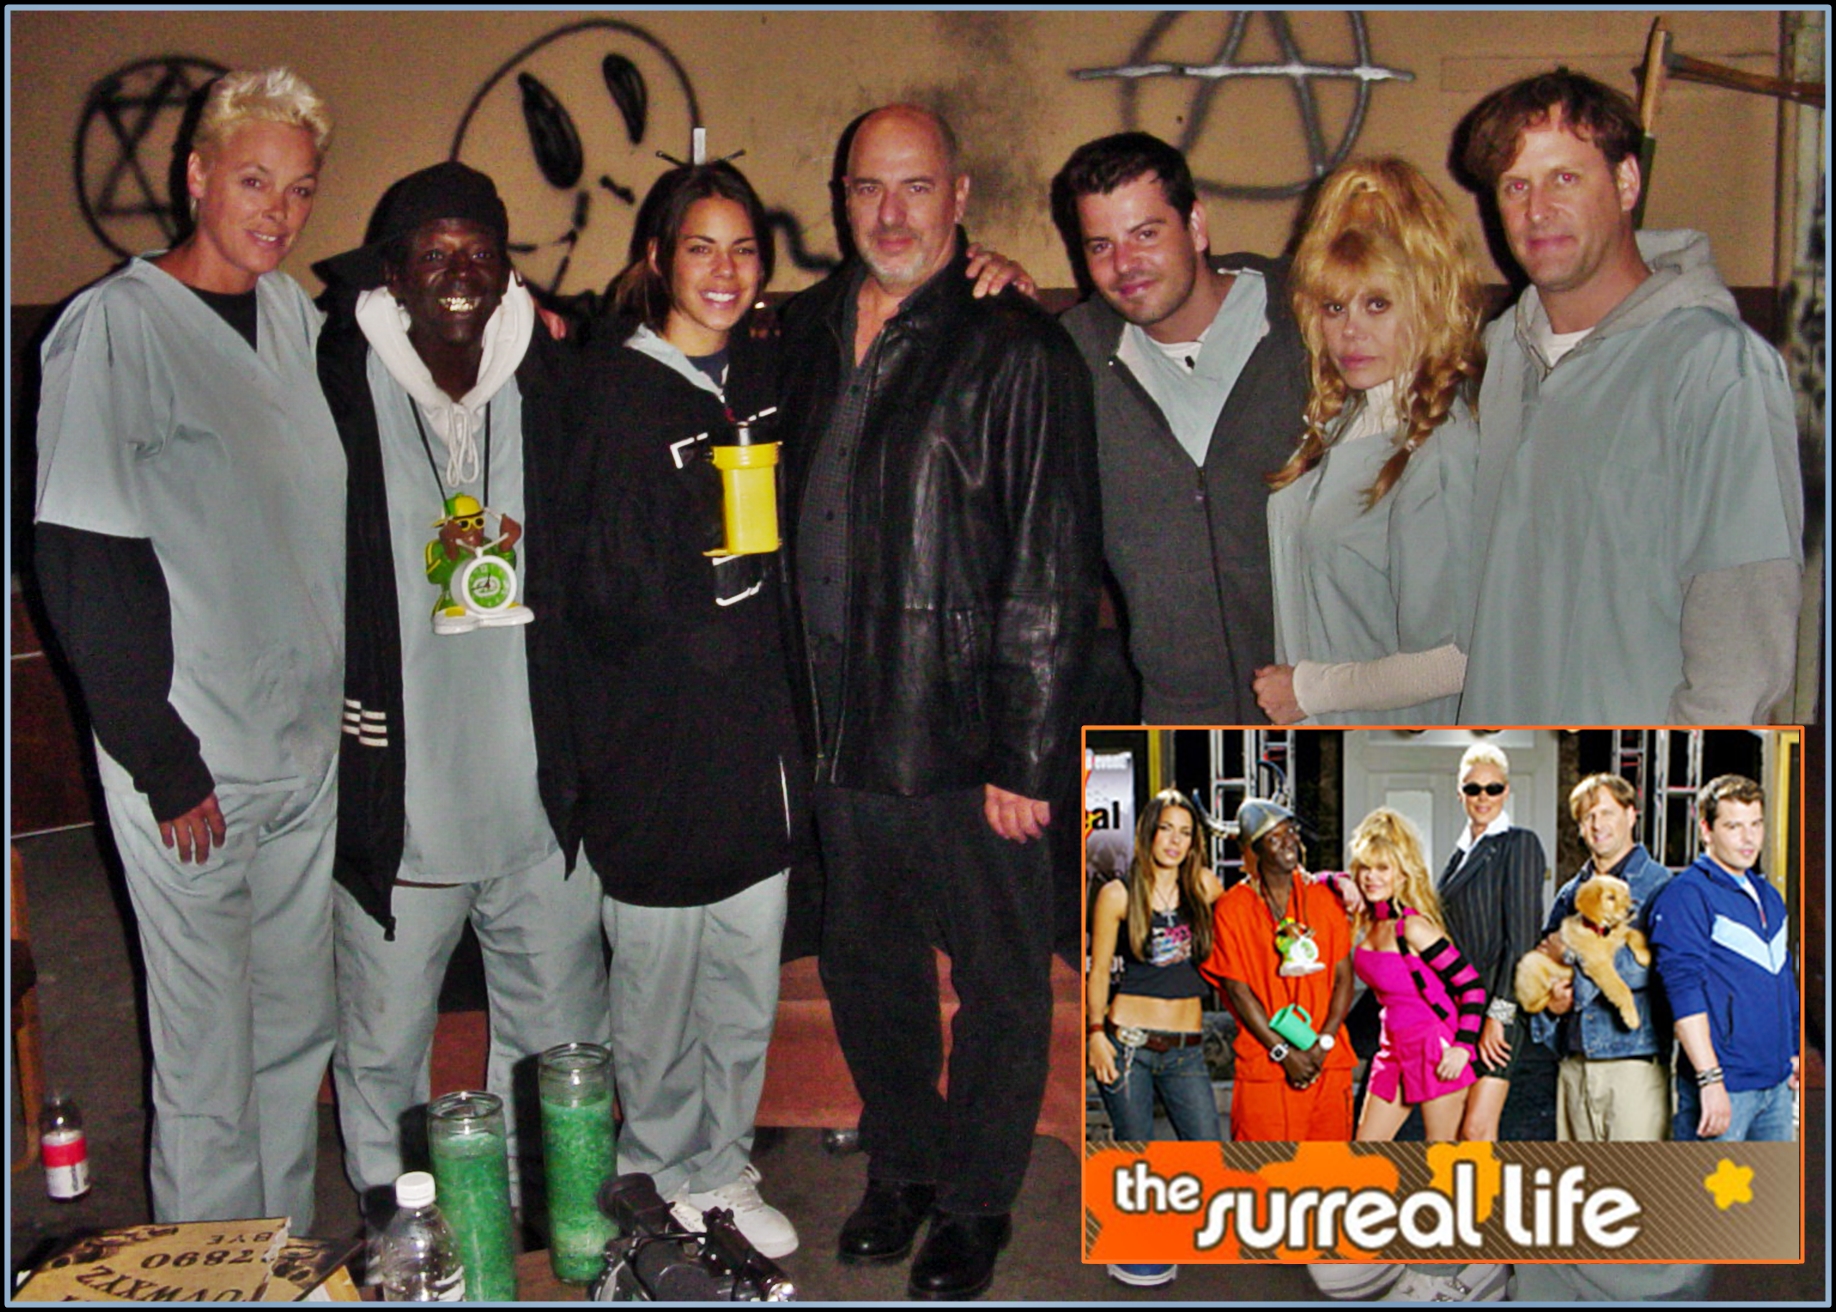 Larry Montz and 2004 SURREAL LIFE cast after filming inside Linda Vista Hospital, Summer 2004, aired October 2004. (L - R) Brigitte Nielsen, Flavor Flav, Ryan Starr, Larry Montz, Jordan Knight, Charo, Dave Coulier